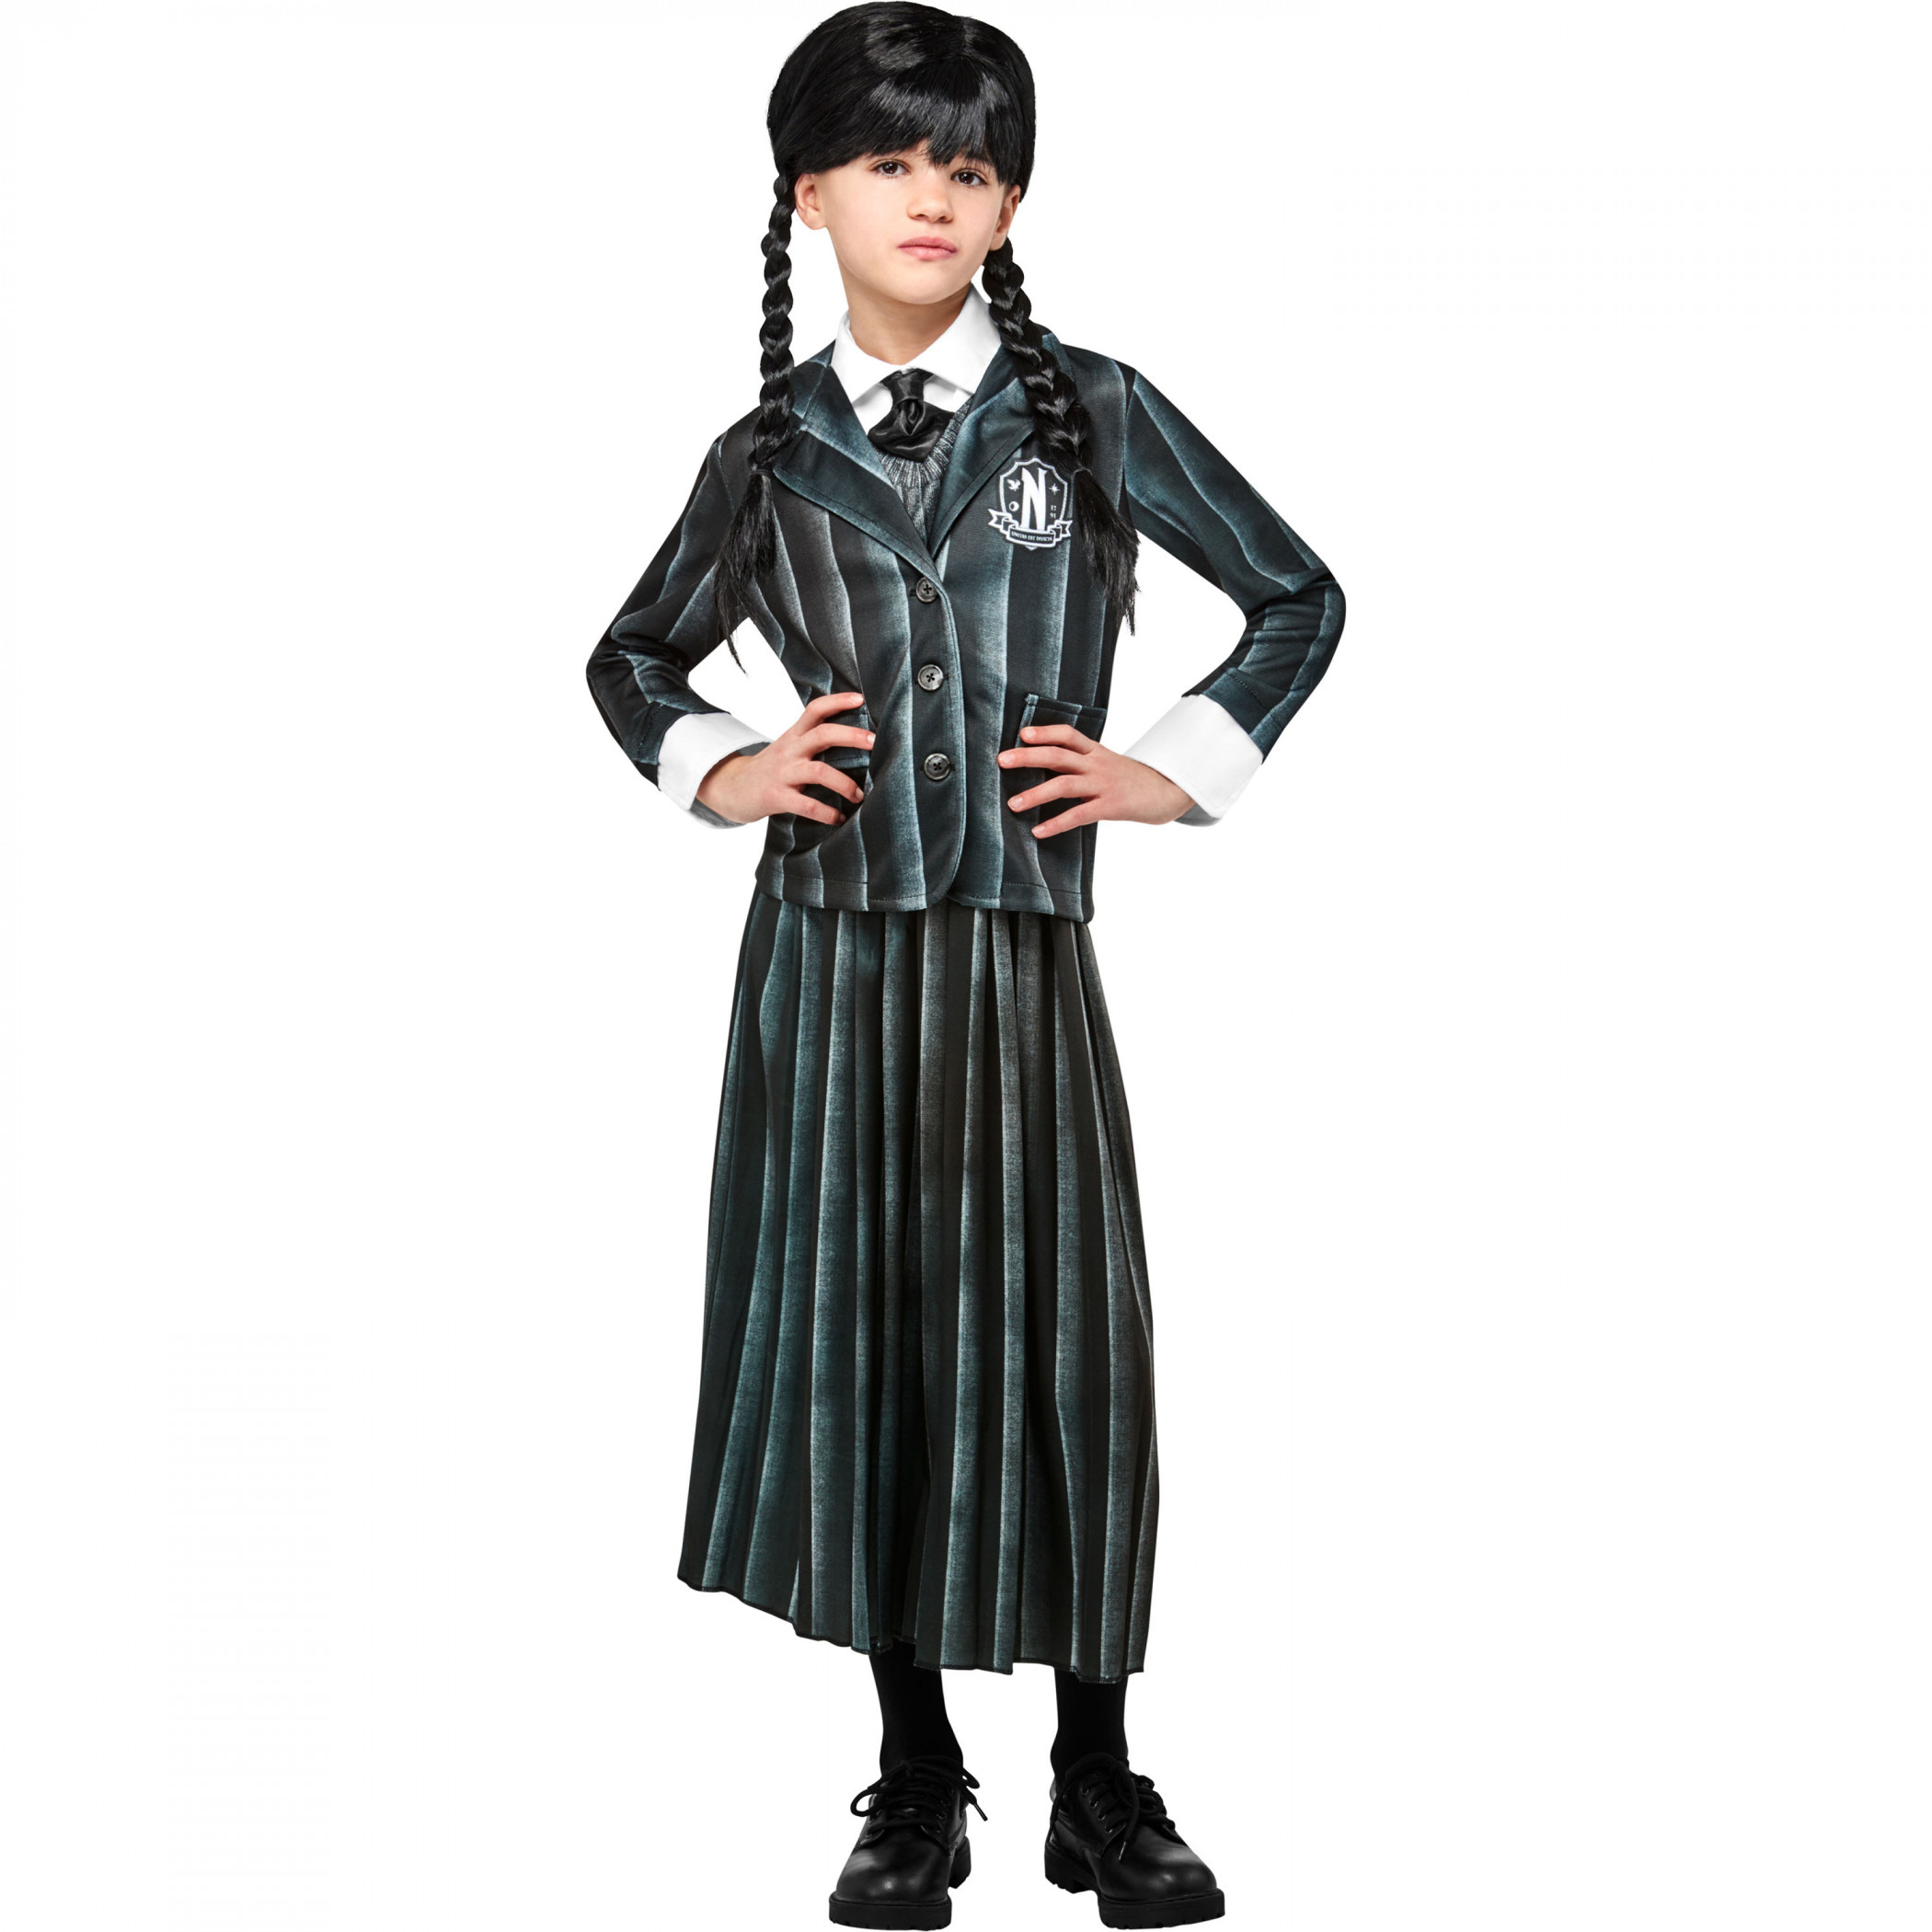 Wednesday Adams Nevermore Academy Girl's Costume